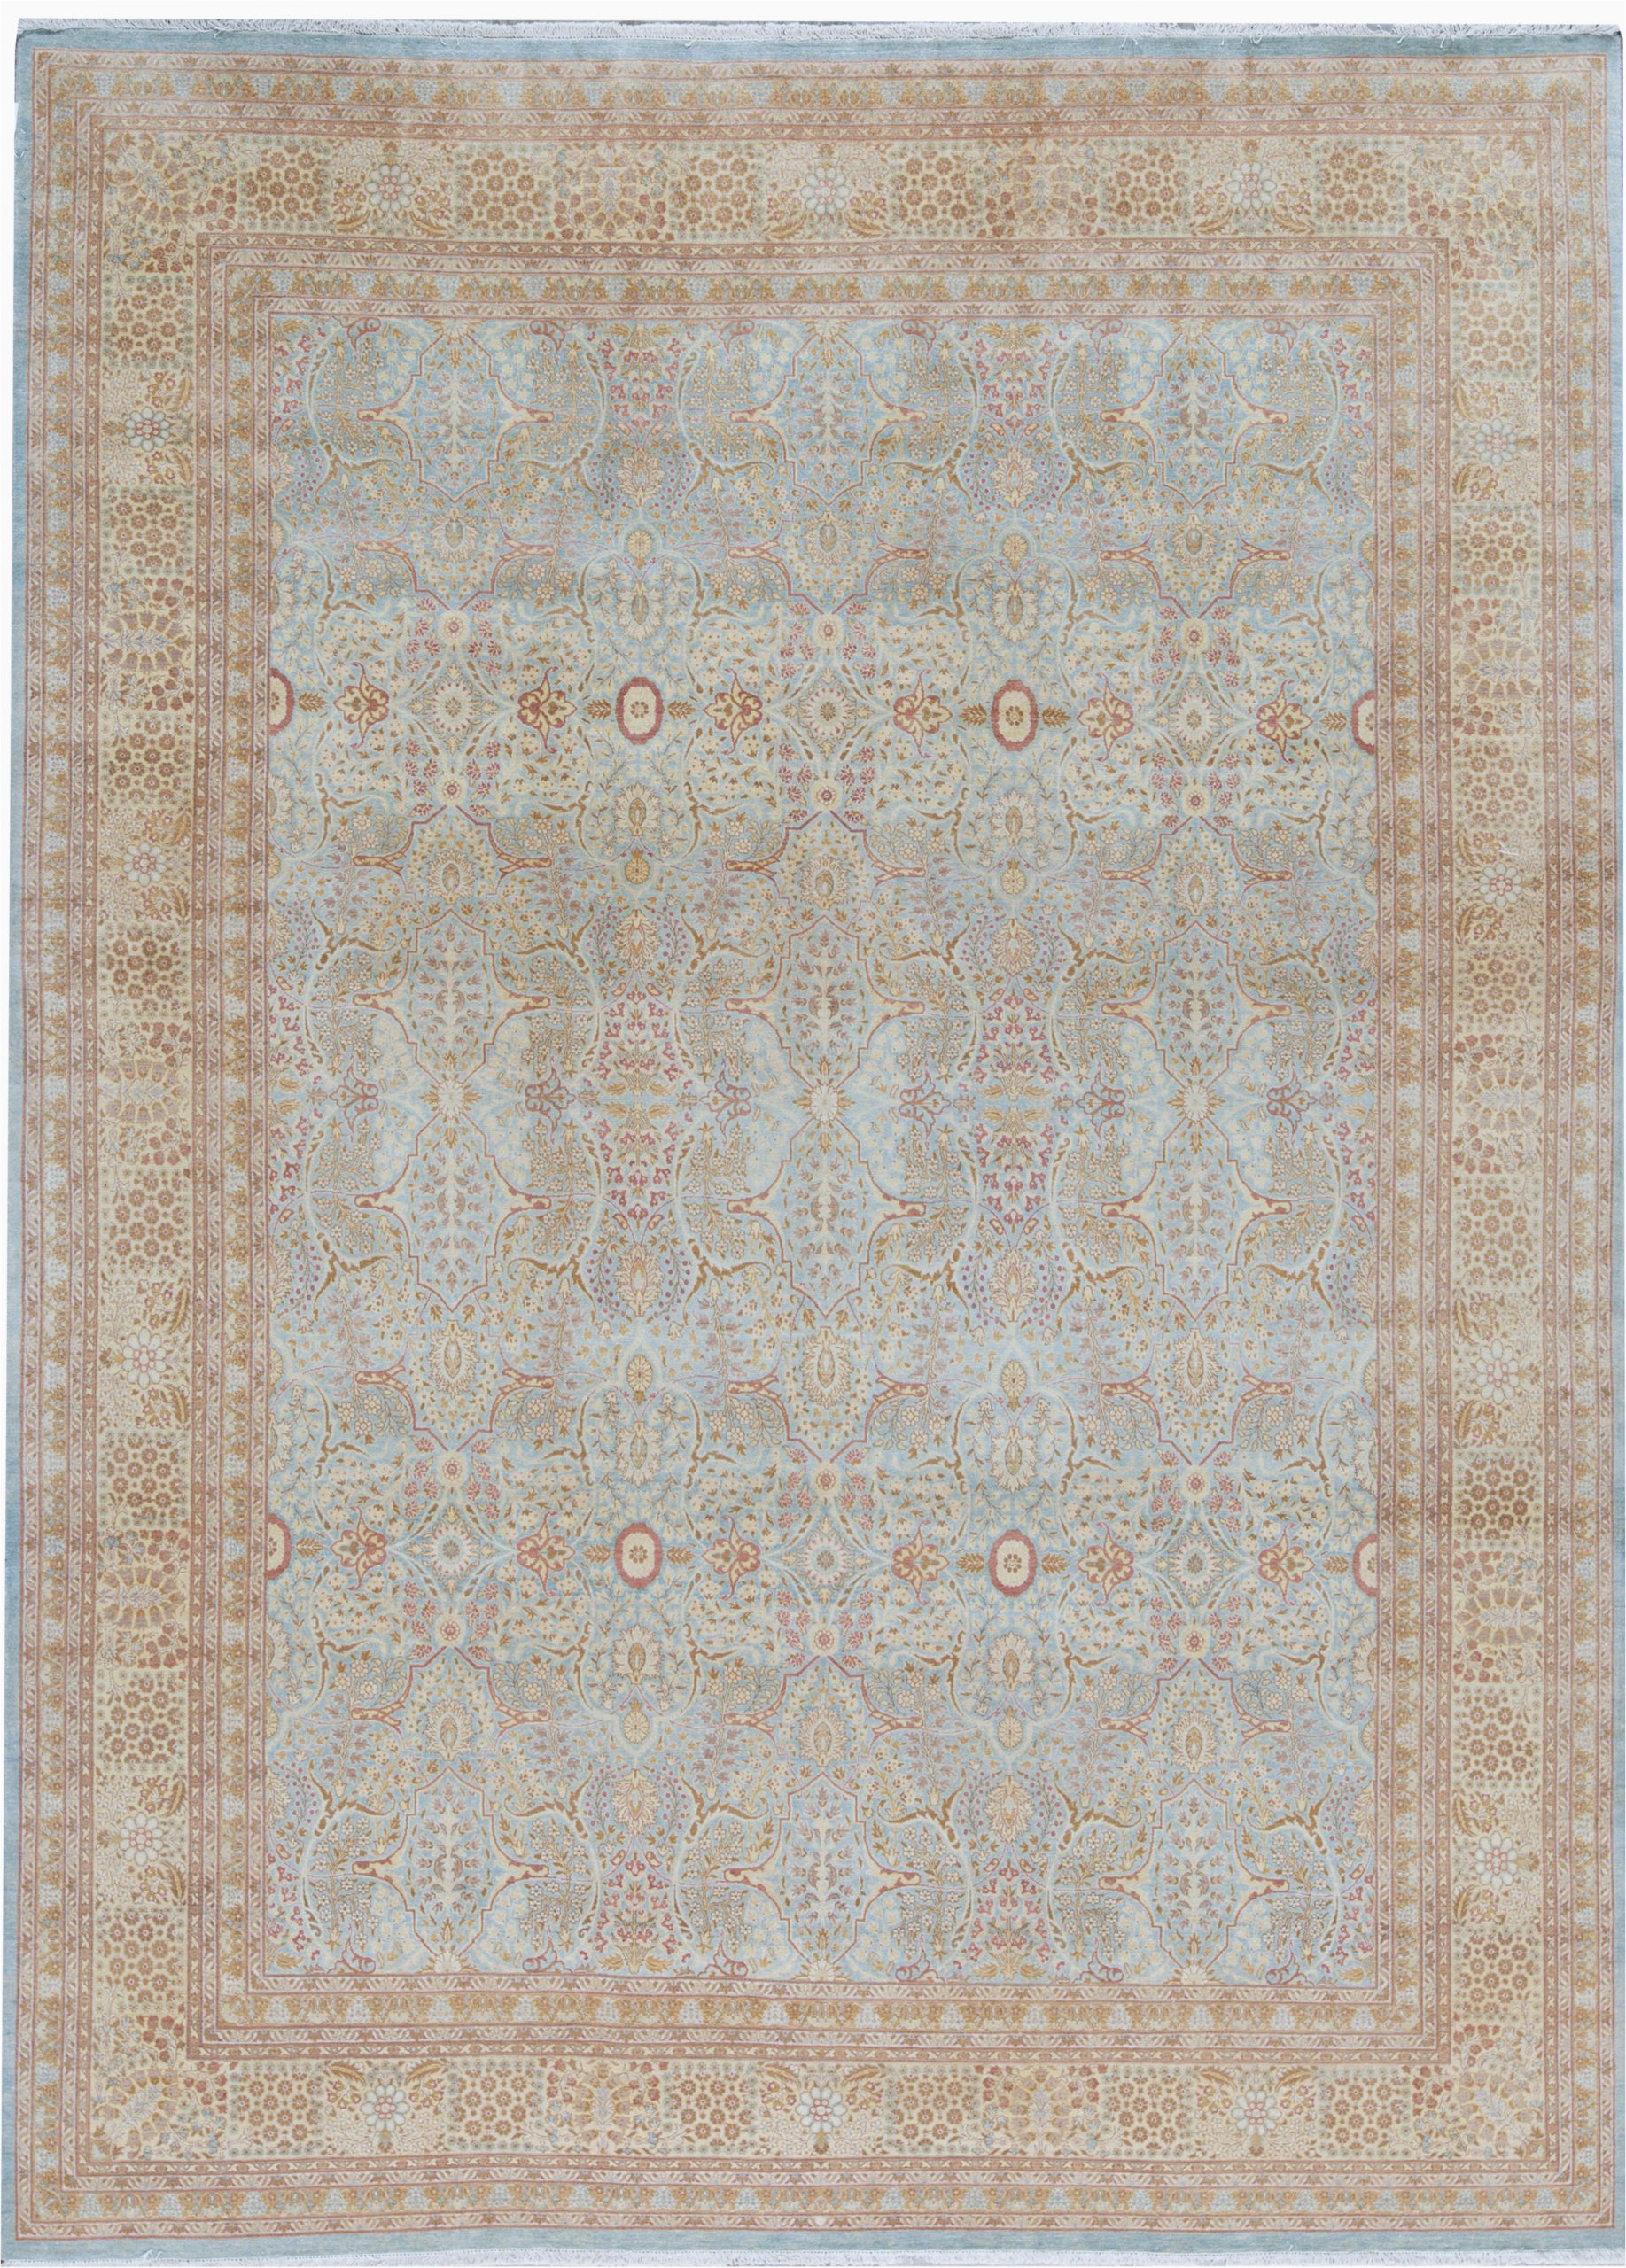 oriental hand knotted wool light bluecream area rug